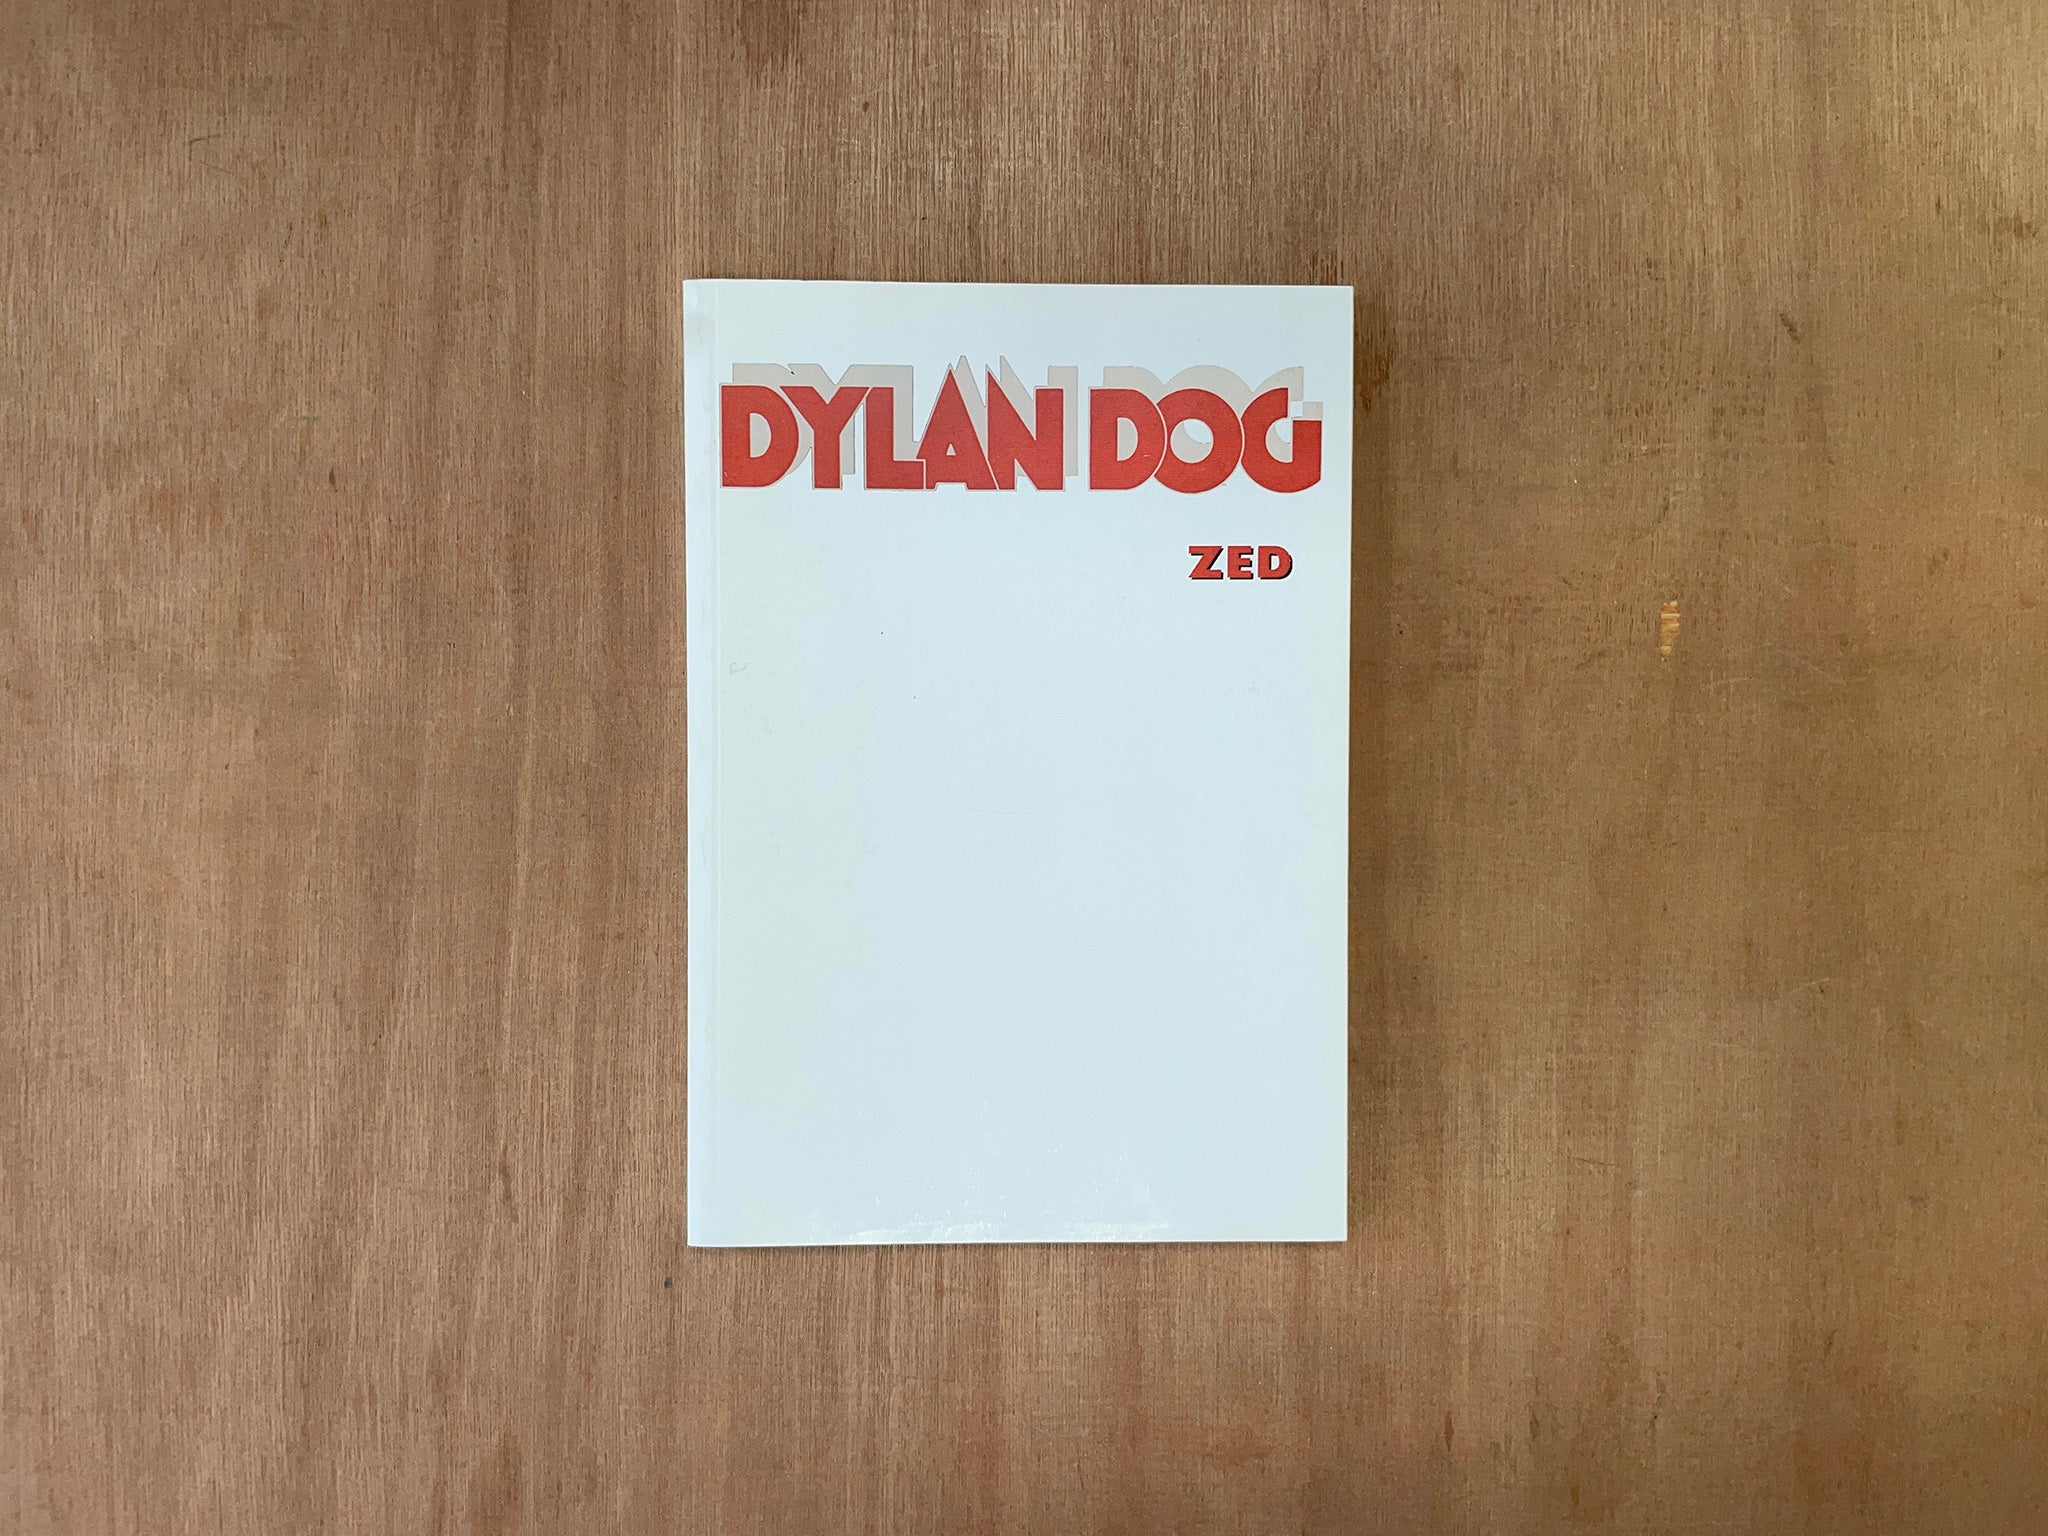 DYLAN DOG - VOL. 4 ZED by Adnan Balet Balcinovic